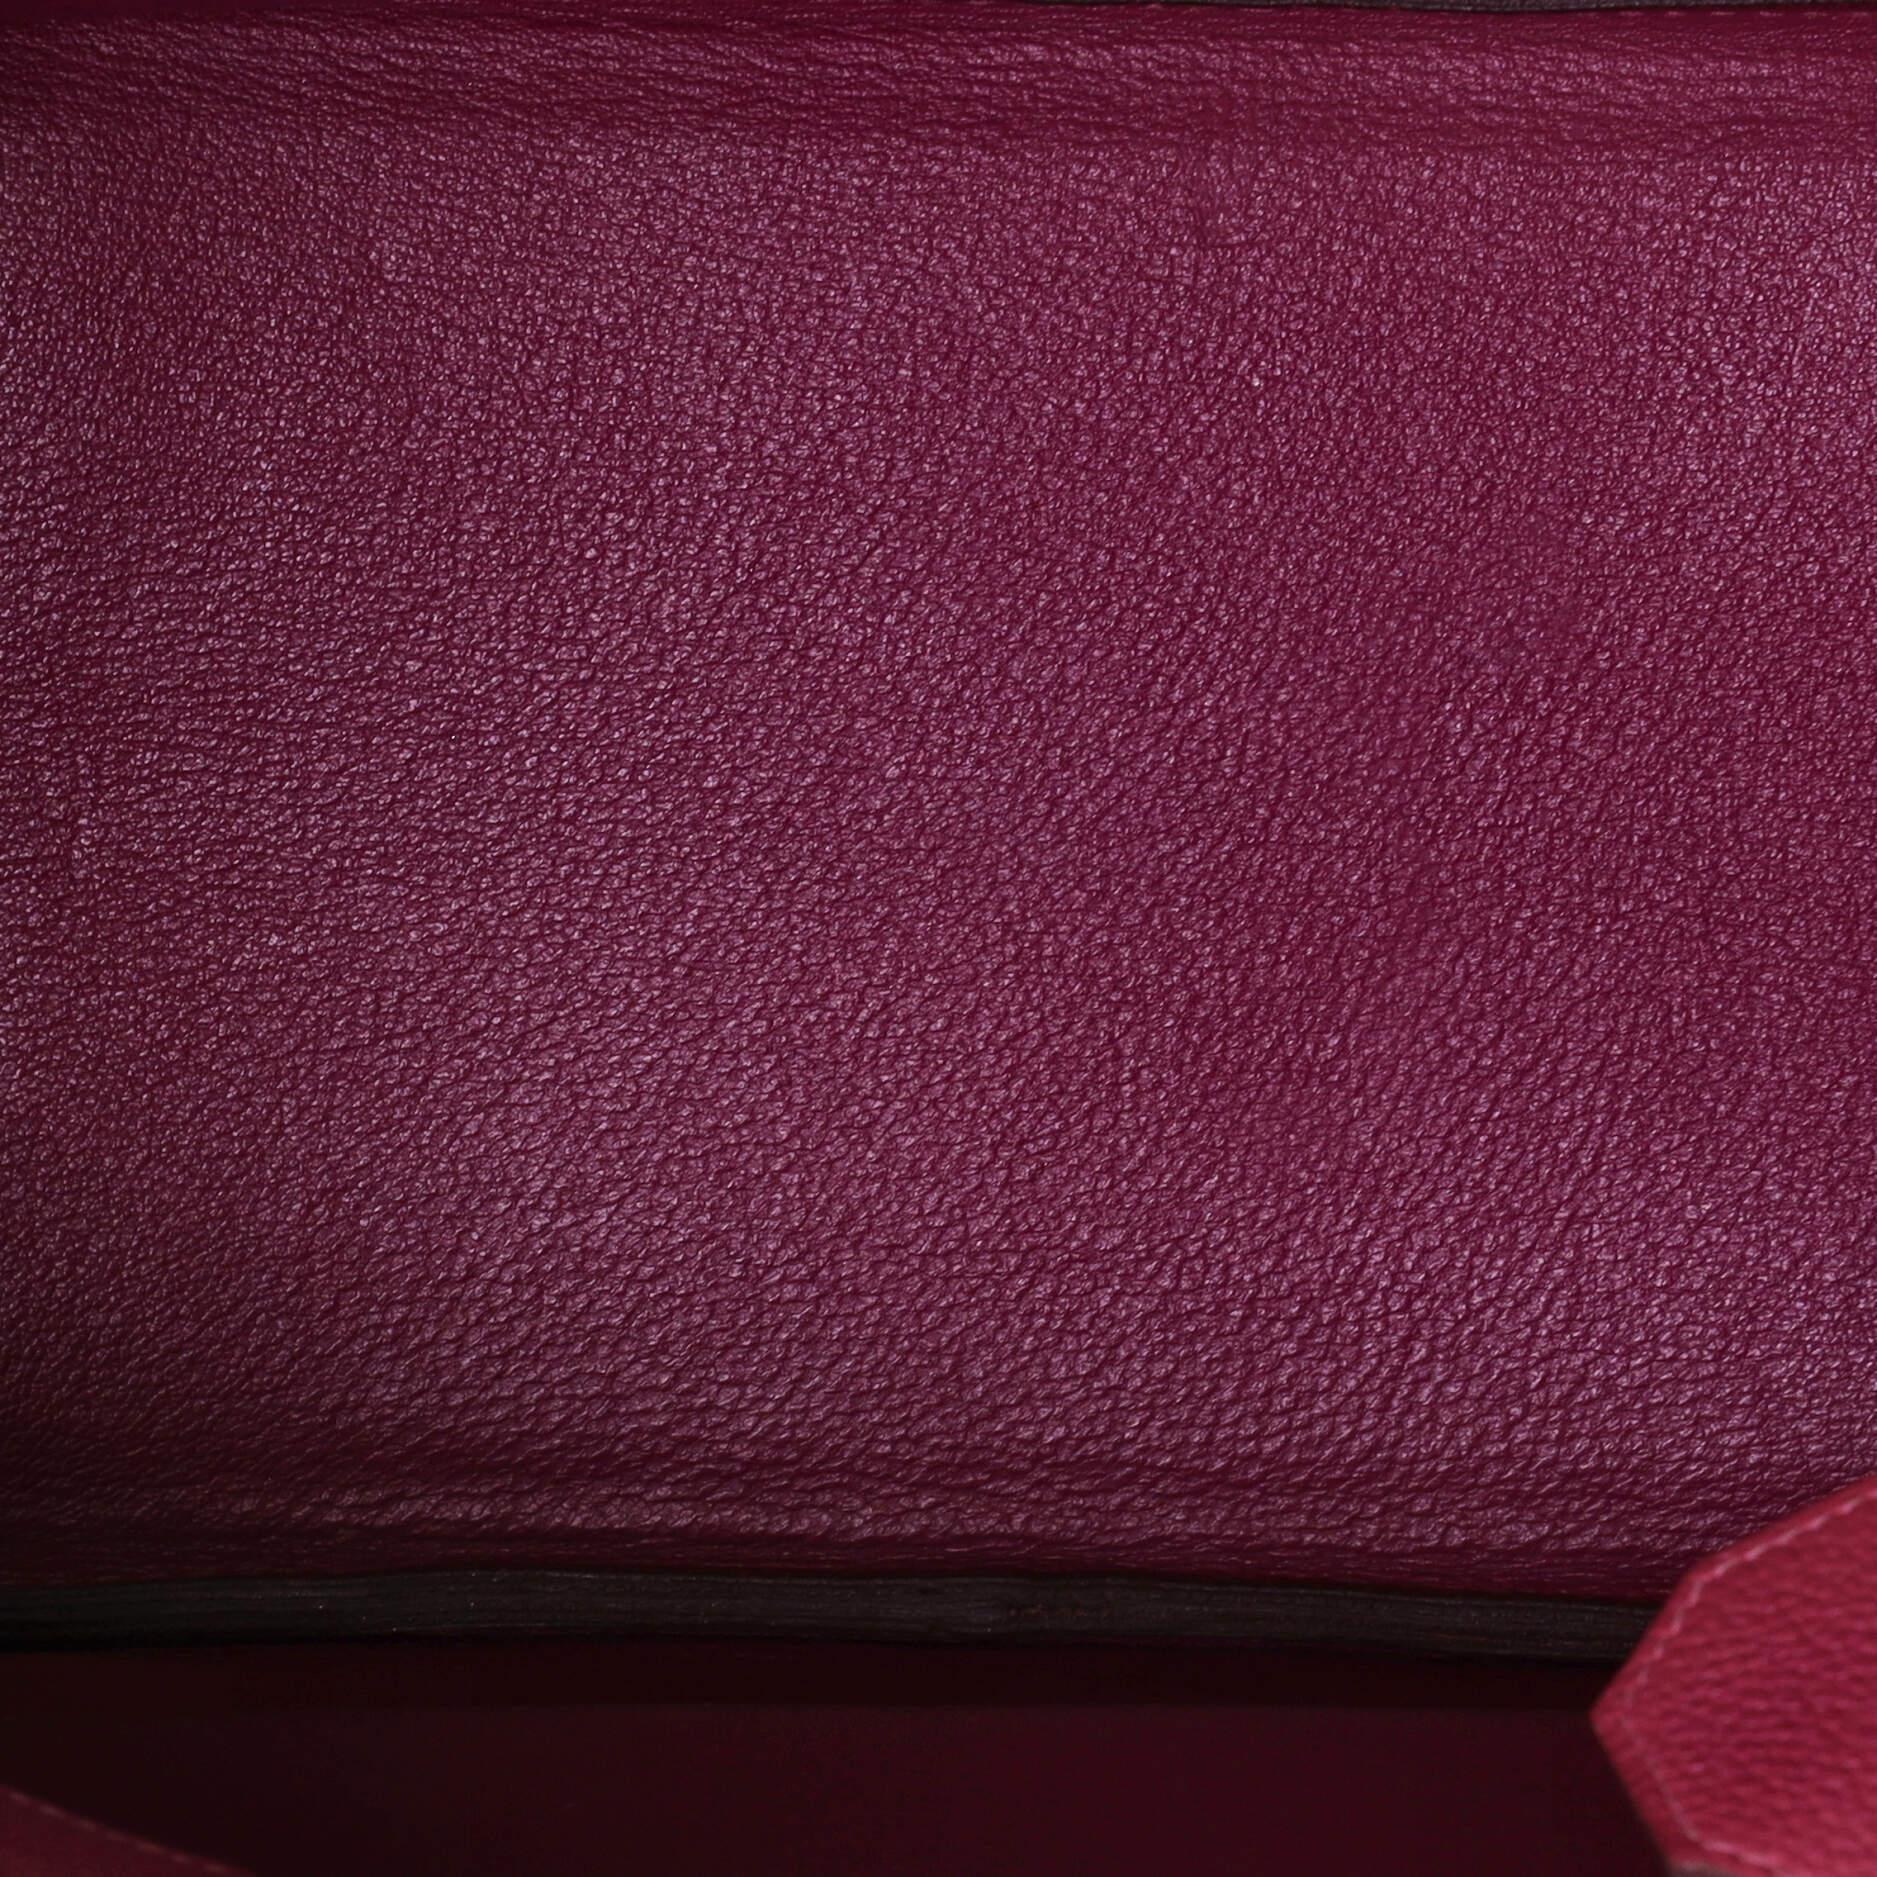 Pink Hermes Birkin Handbag Tosca Clemence with Gold Hardware 35